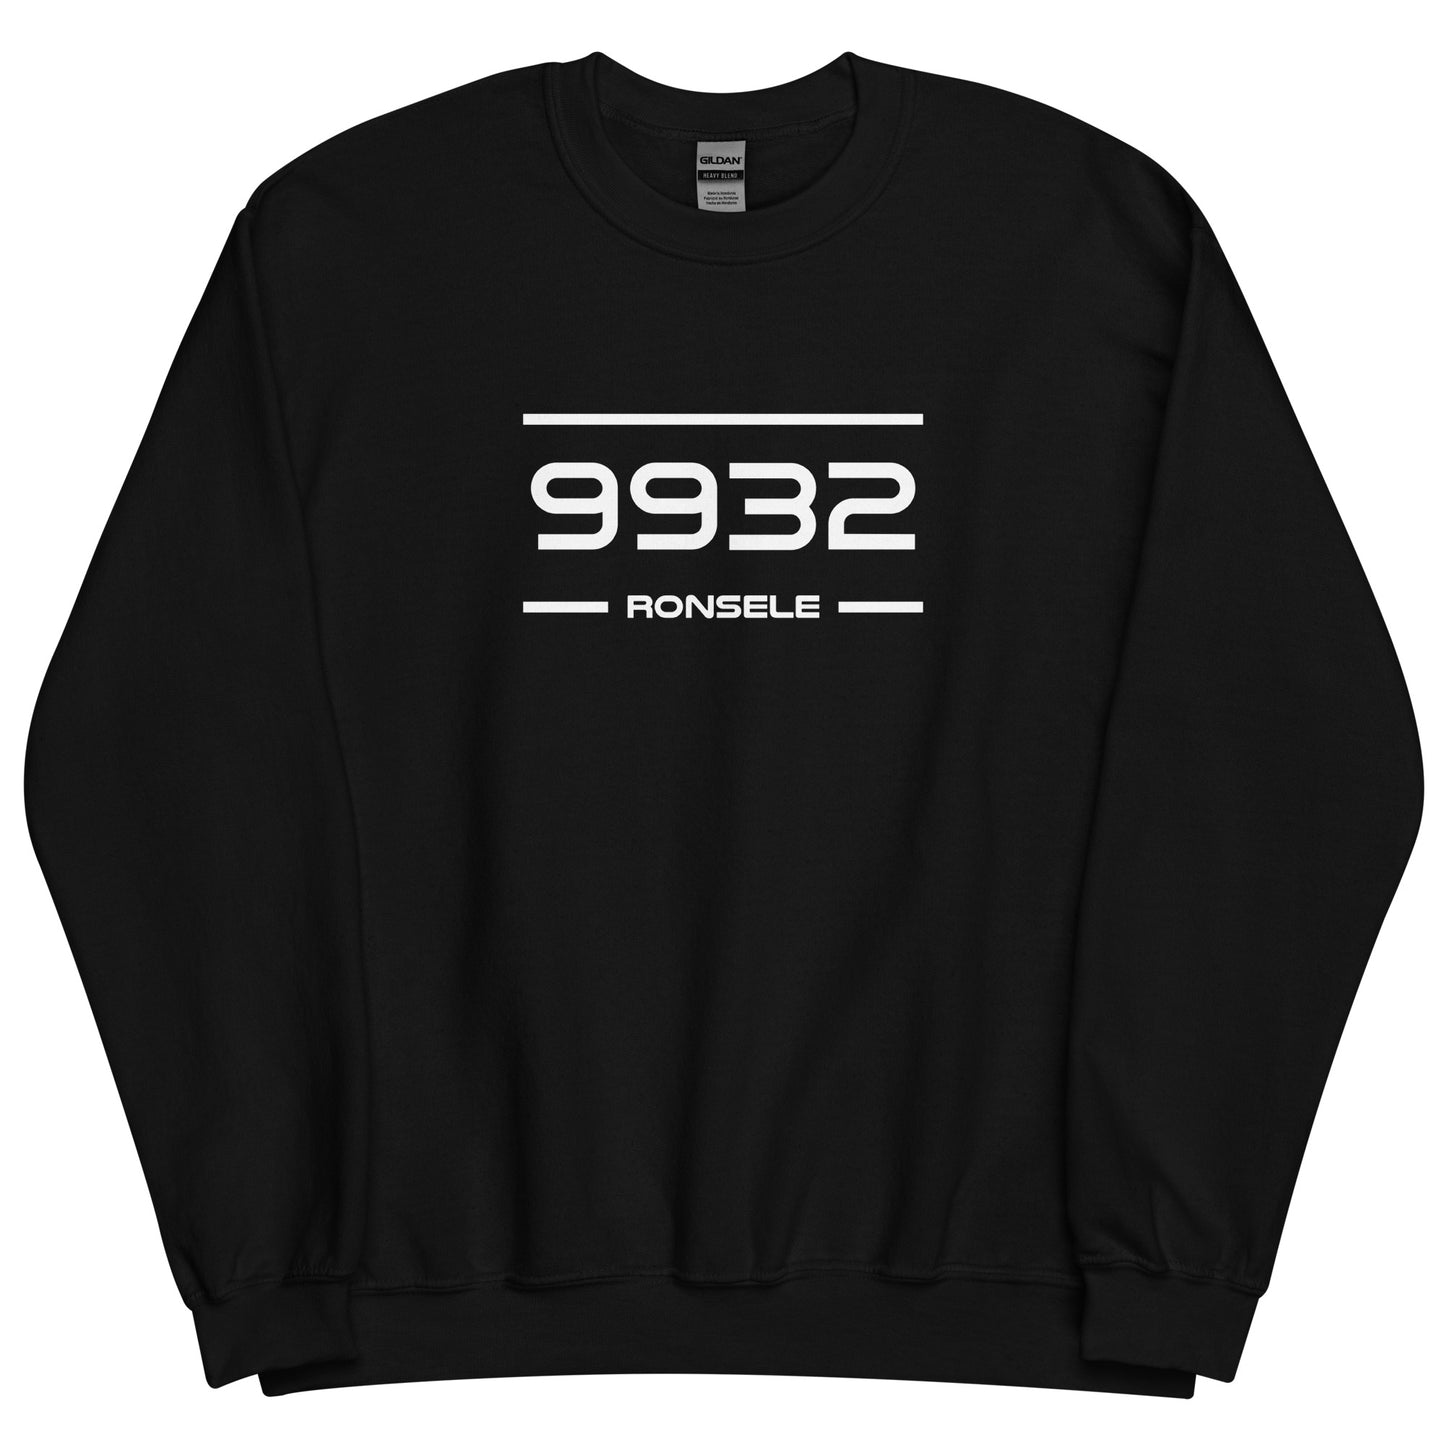 Sweater - 9932 - Ronsele (M/V)